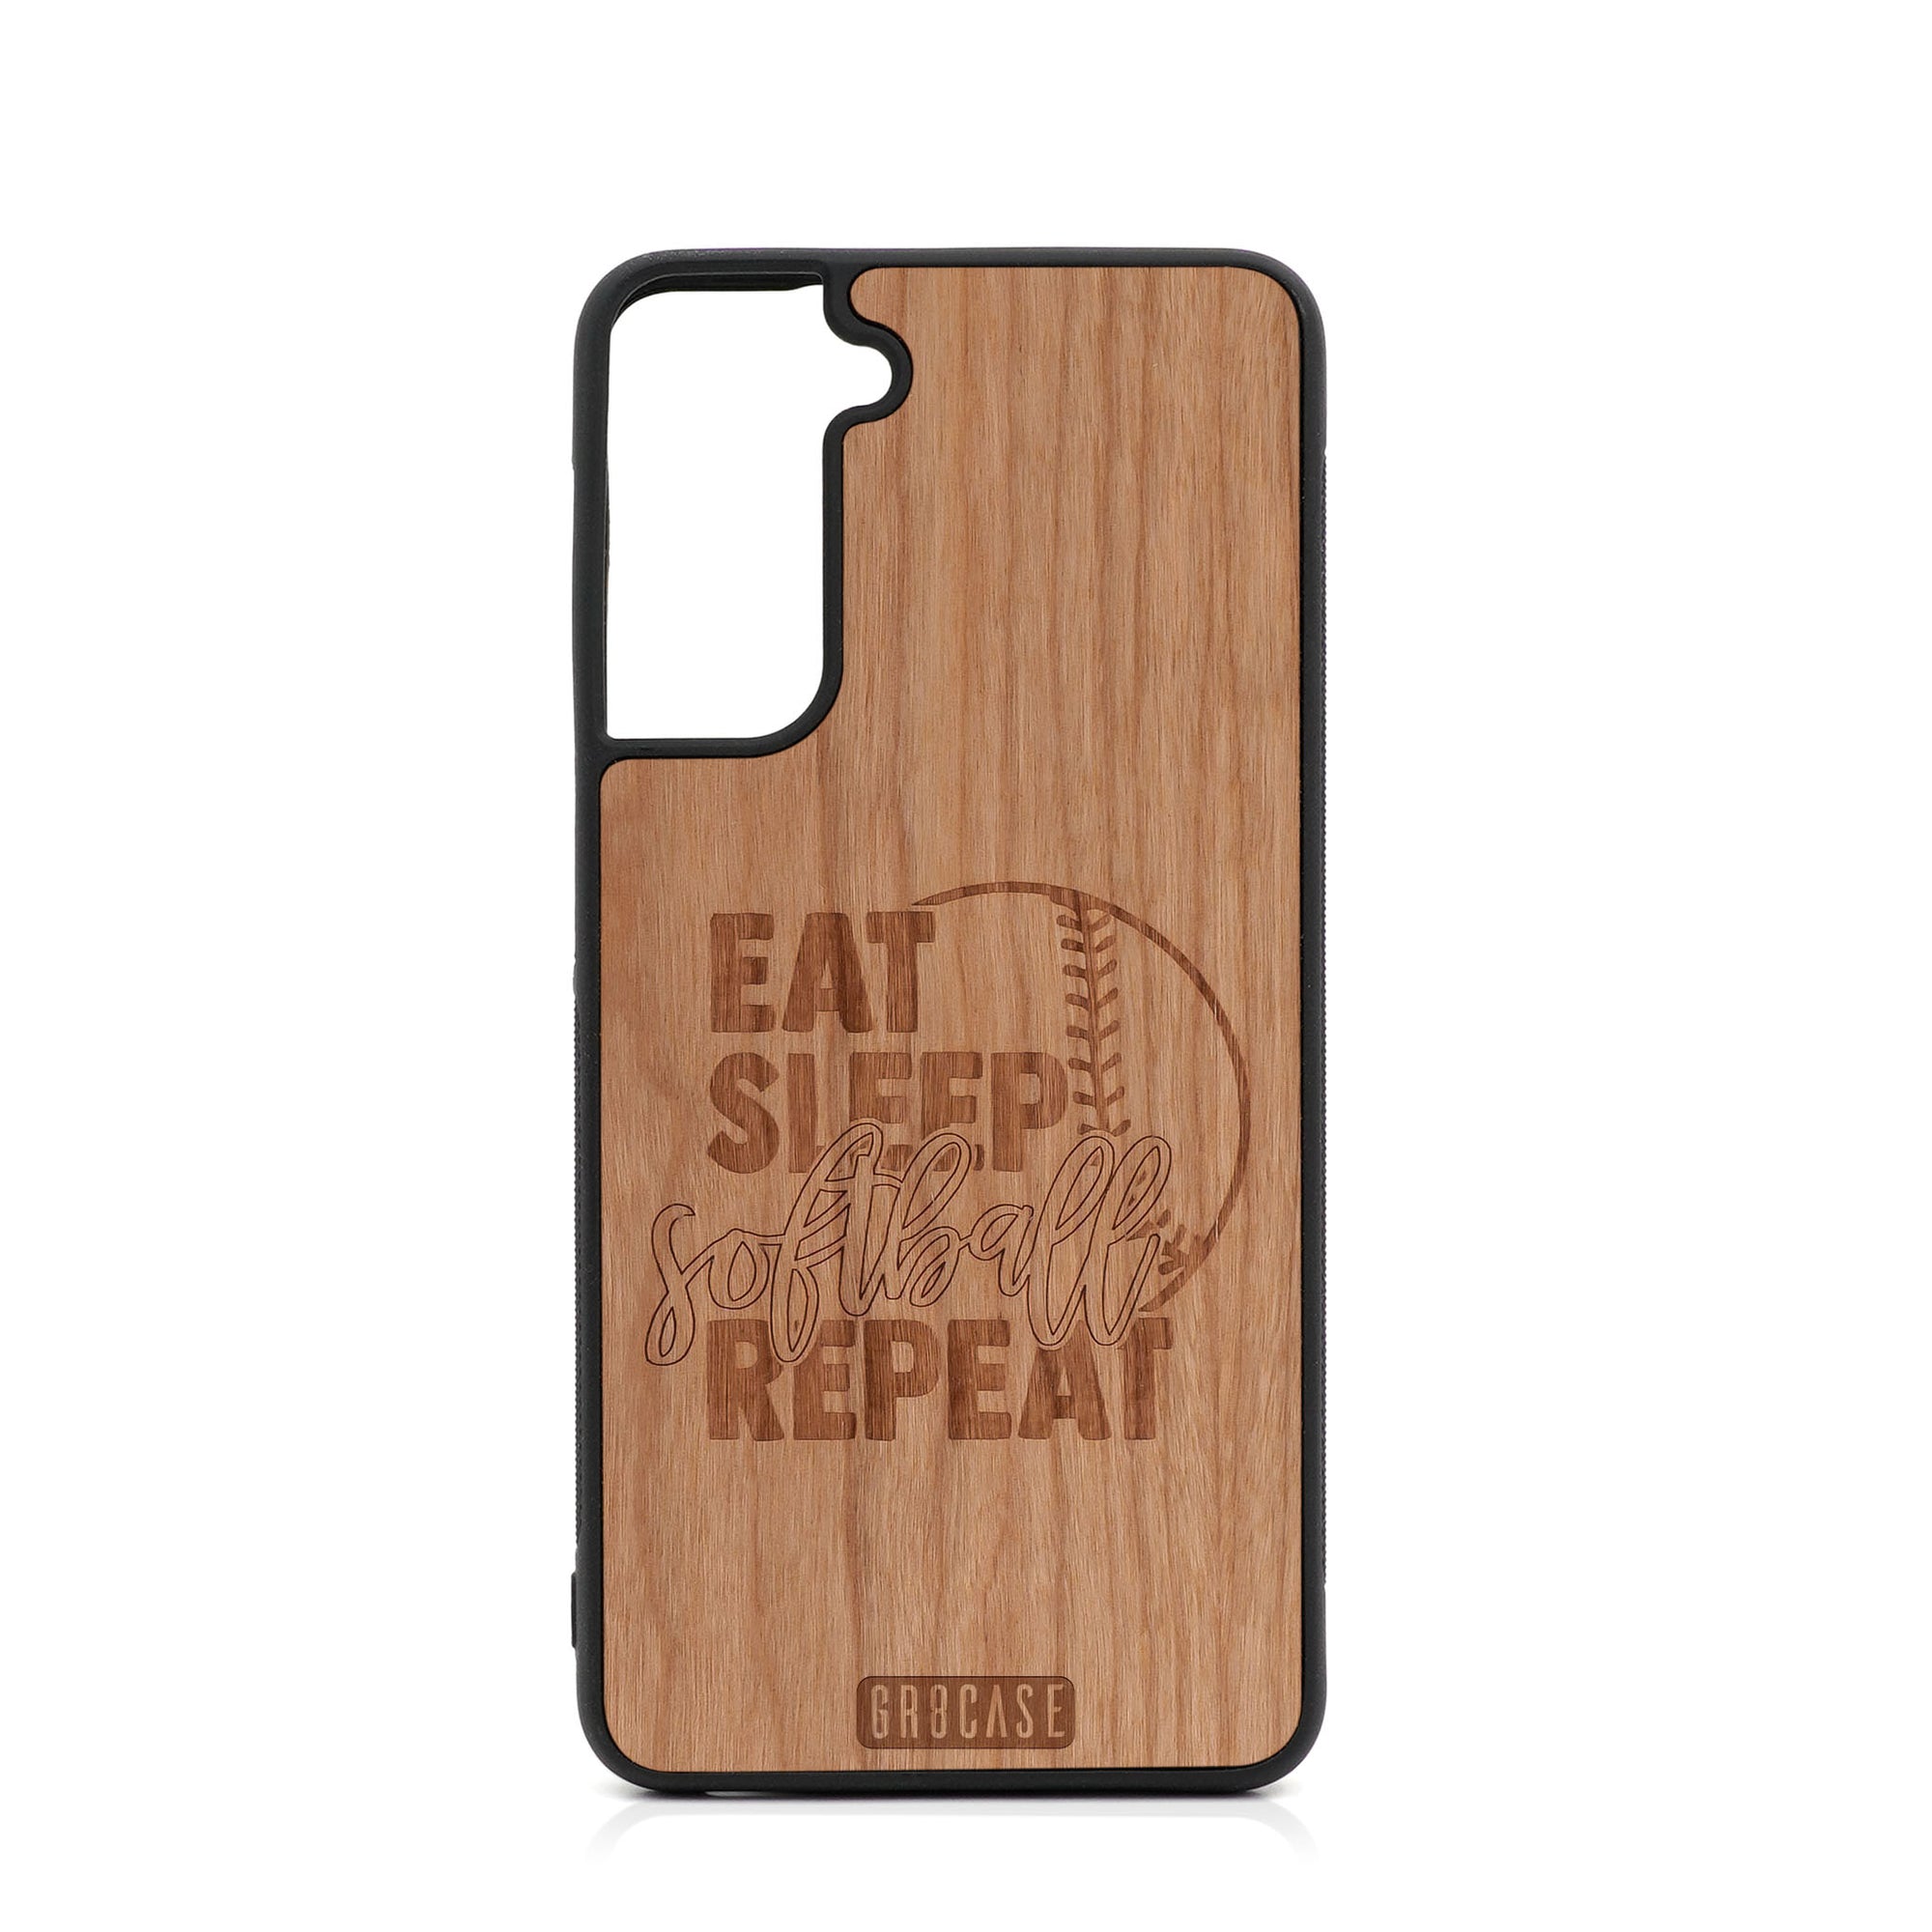 Eat Sleep Softball Repeat Design Wood Case For Samsung Galaxy S21 Plus 5G